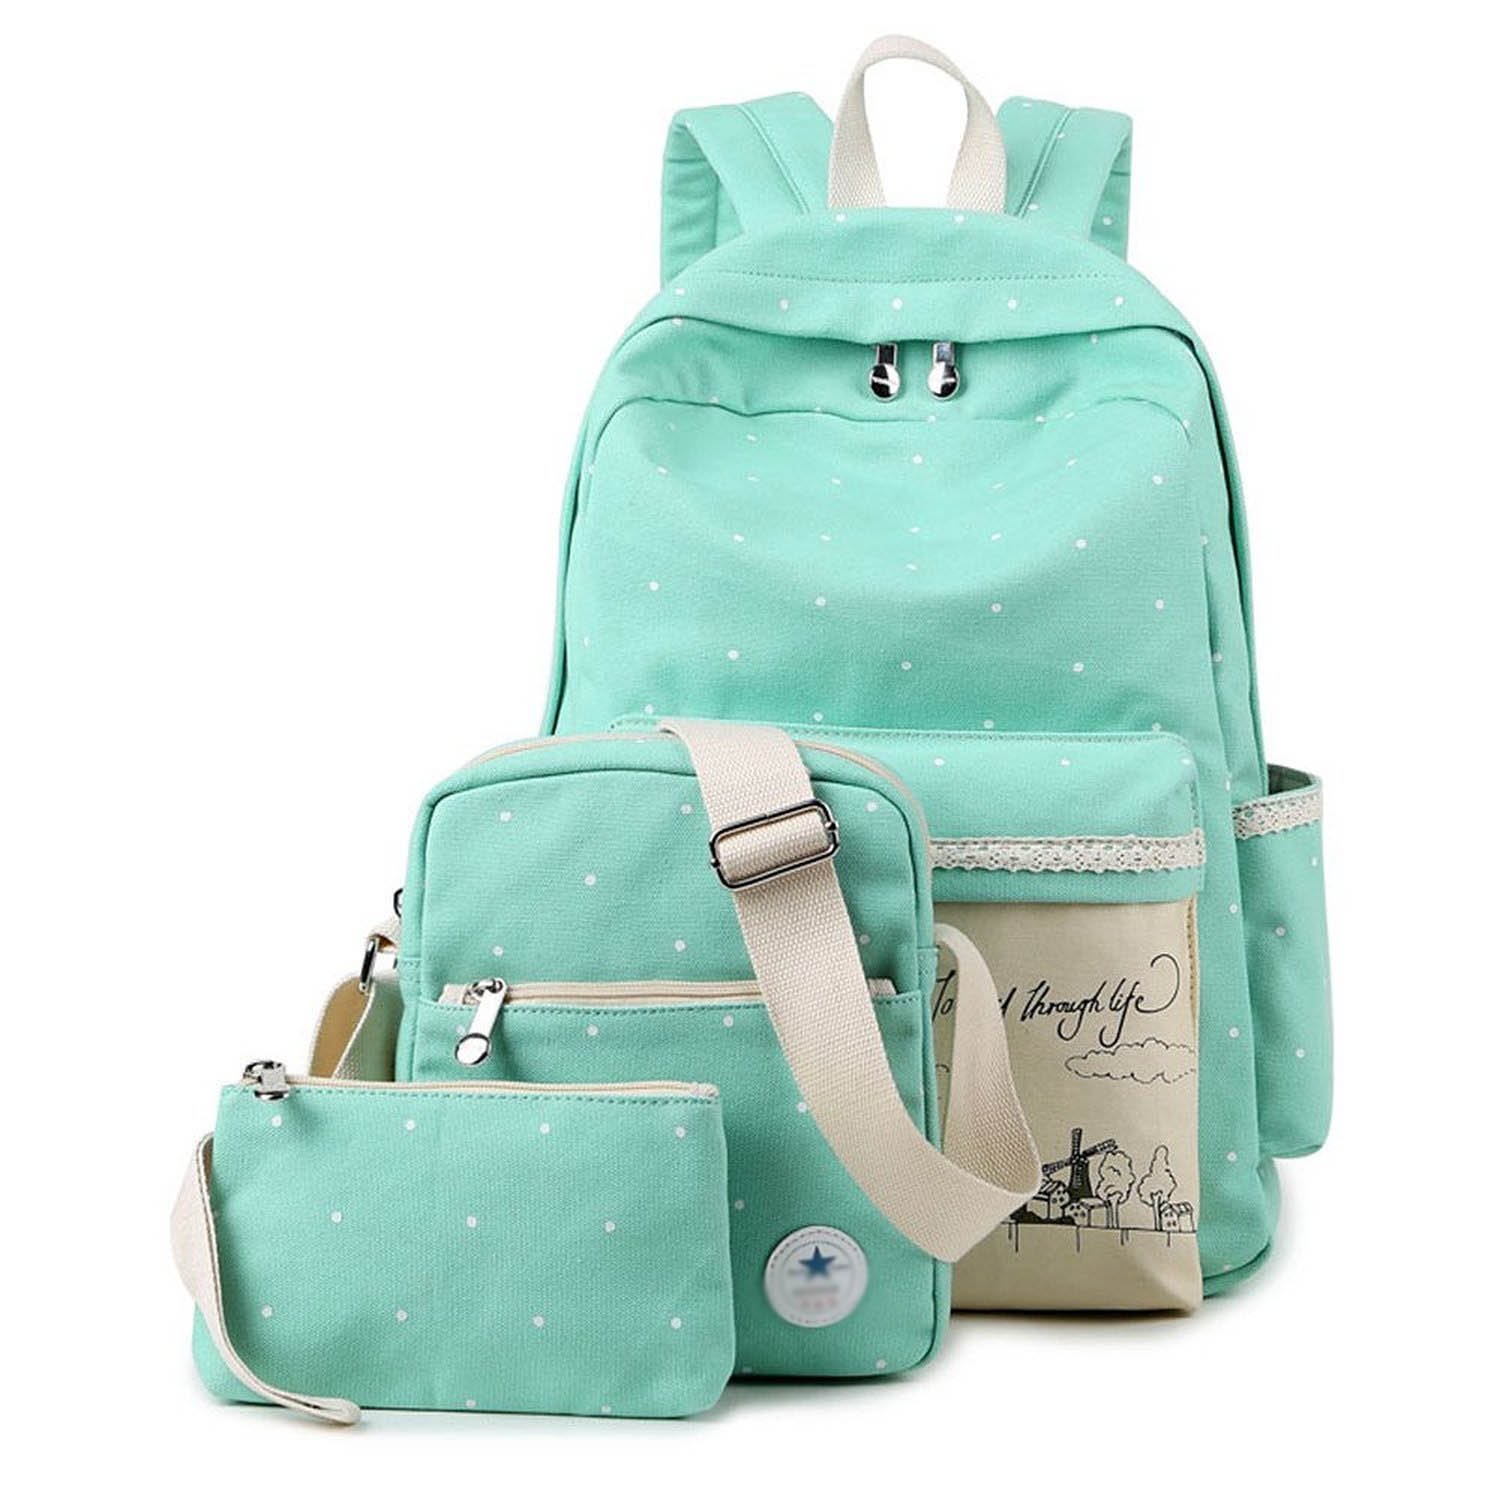 Samaz 3-in-1 Cute Korean Lace Canvas School Backpack for Teen Girls - $29.99